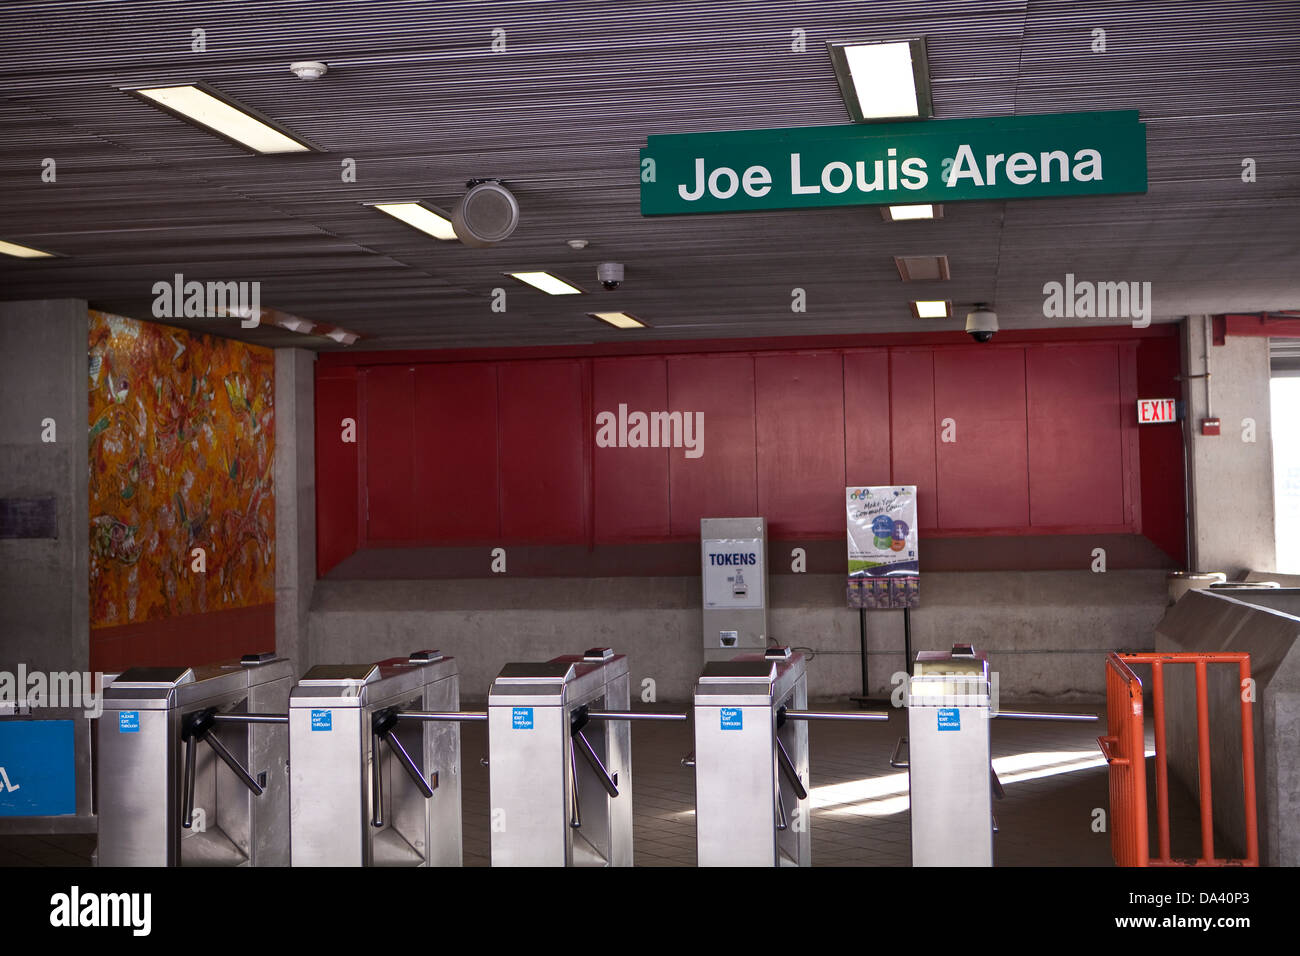 19 Joe Louis Arena Images, Stock Photos, 3D objects, & Vectors